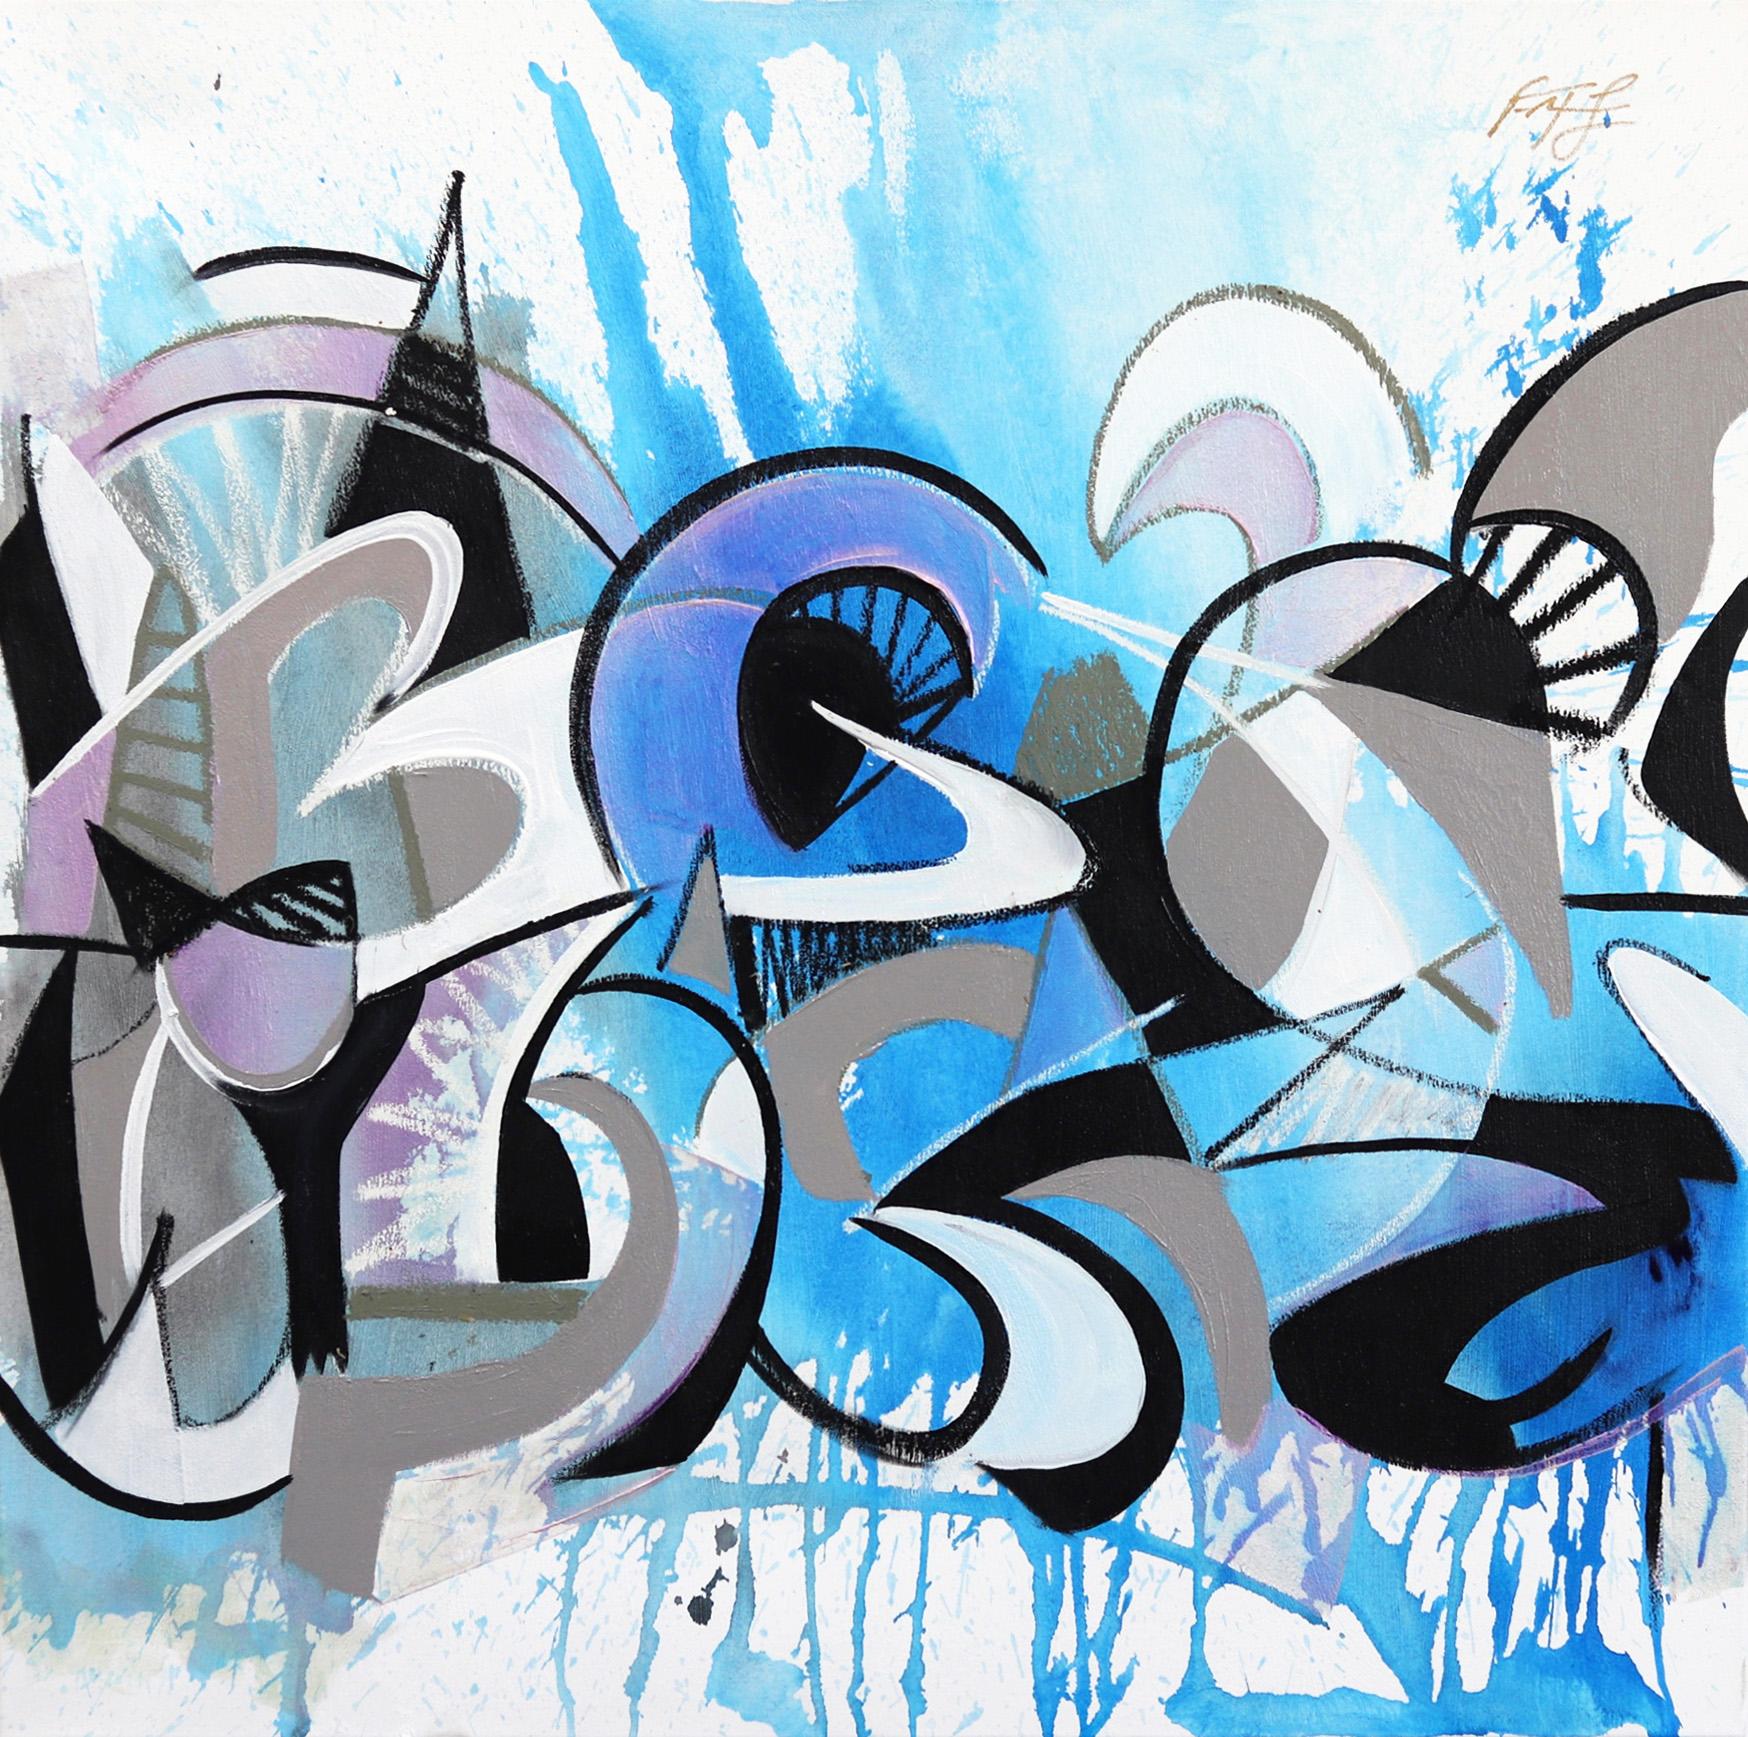 Frankie Alfonso Abstract Painting - Splish Splash - Original Graffiti Style Painting Mixed Media on Canvas